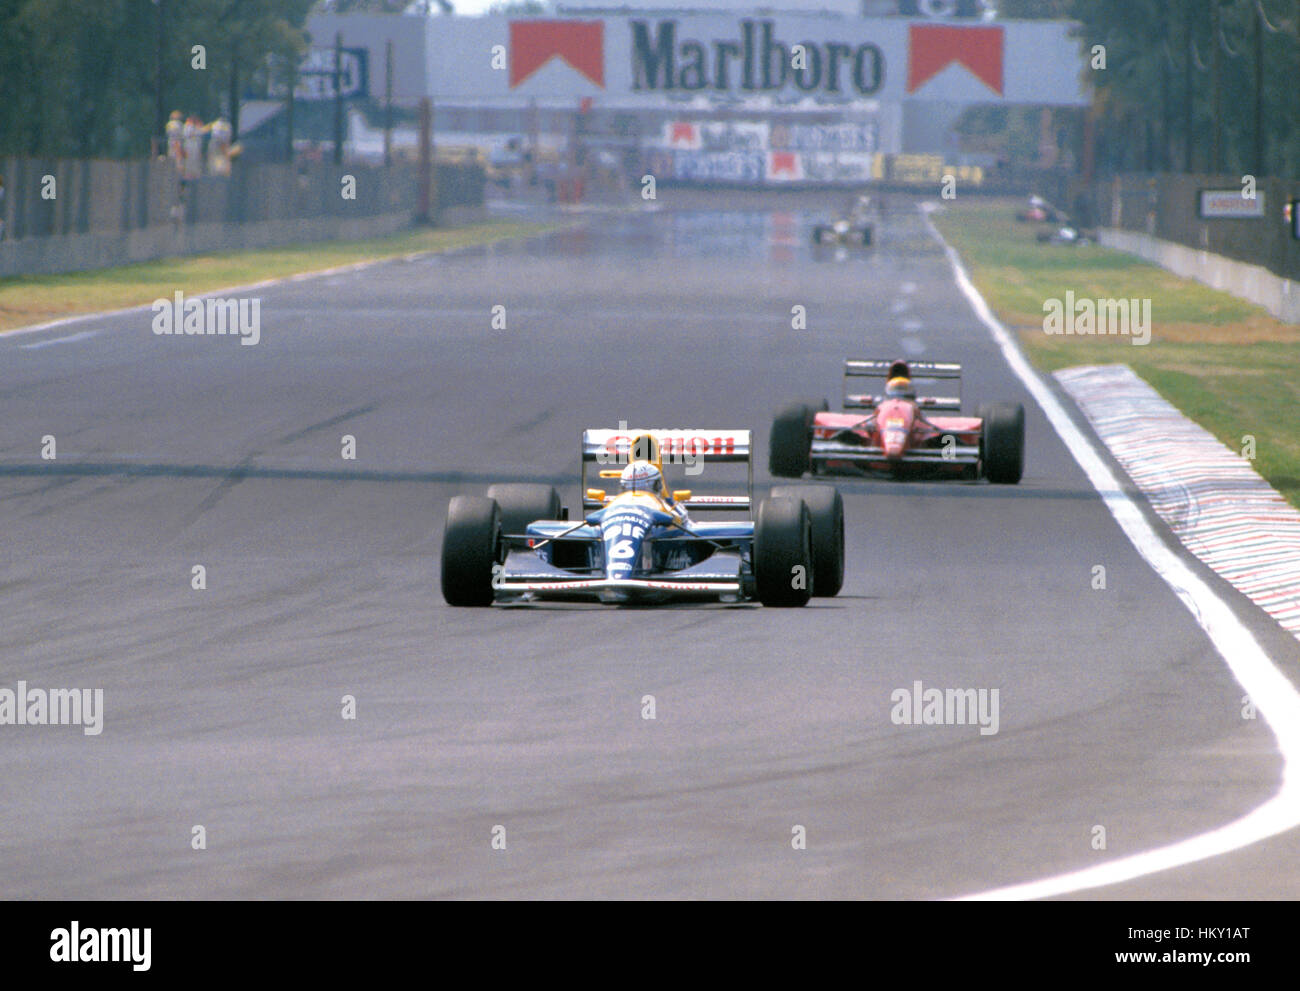 1992 Ricardo Patrese Brazilian Williams FW14B Monza Italian GP 5th FL Stock Photo